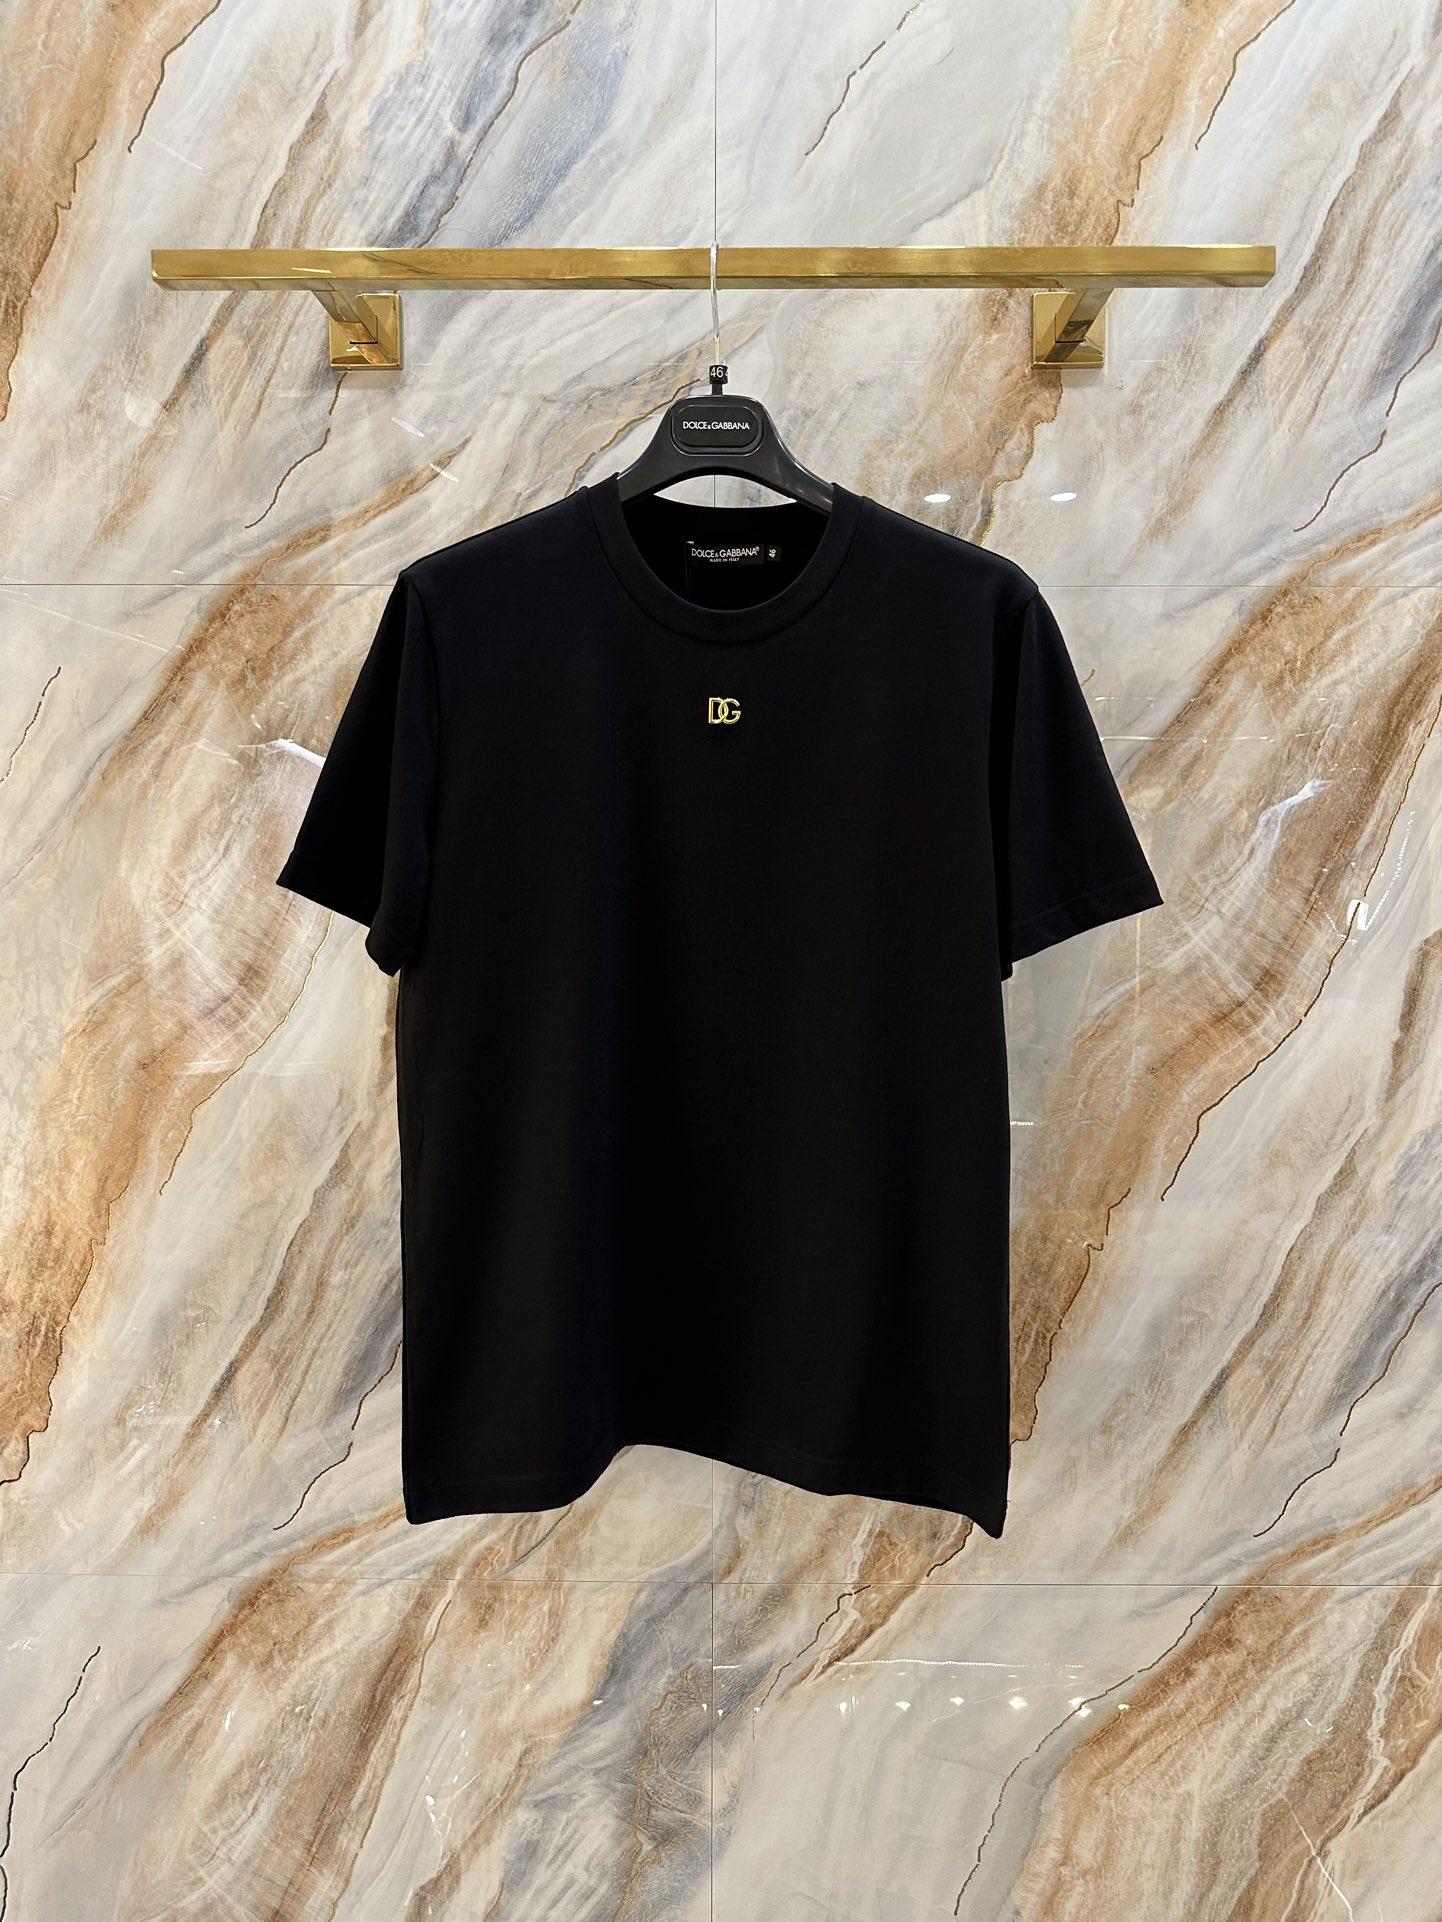 cotton-t-shirt-with-metallic-dg-logo-7173_16845017962-1000